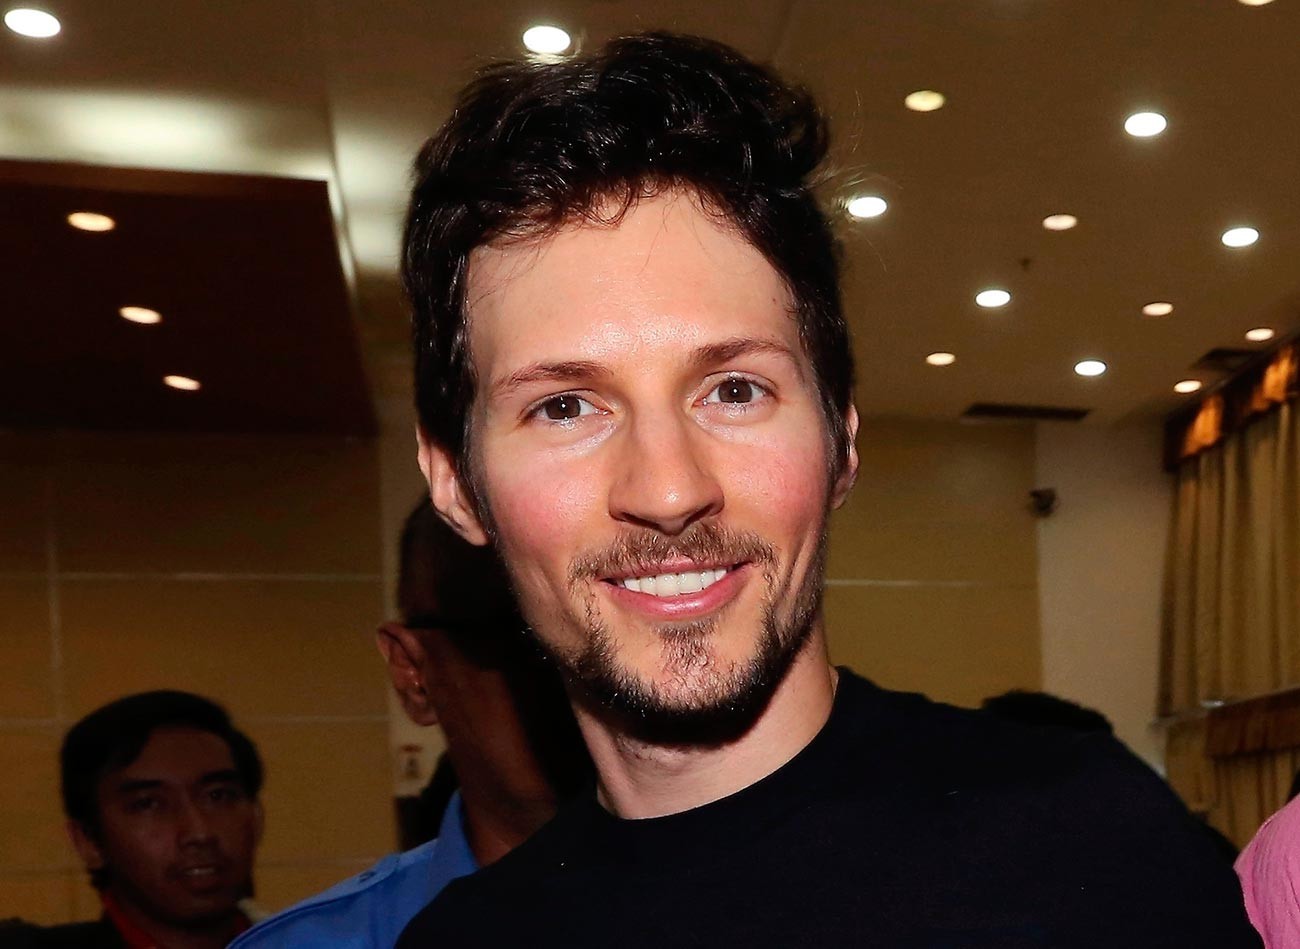 Pavel Durov
